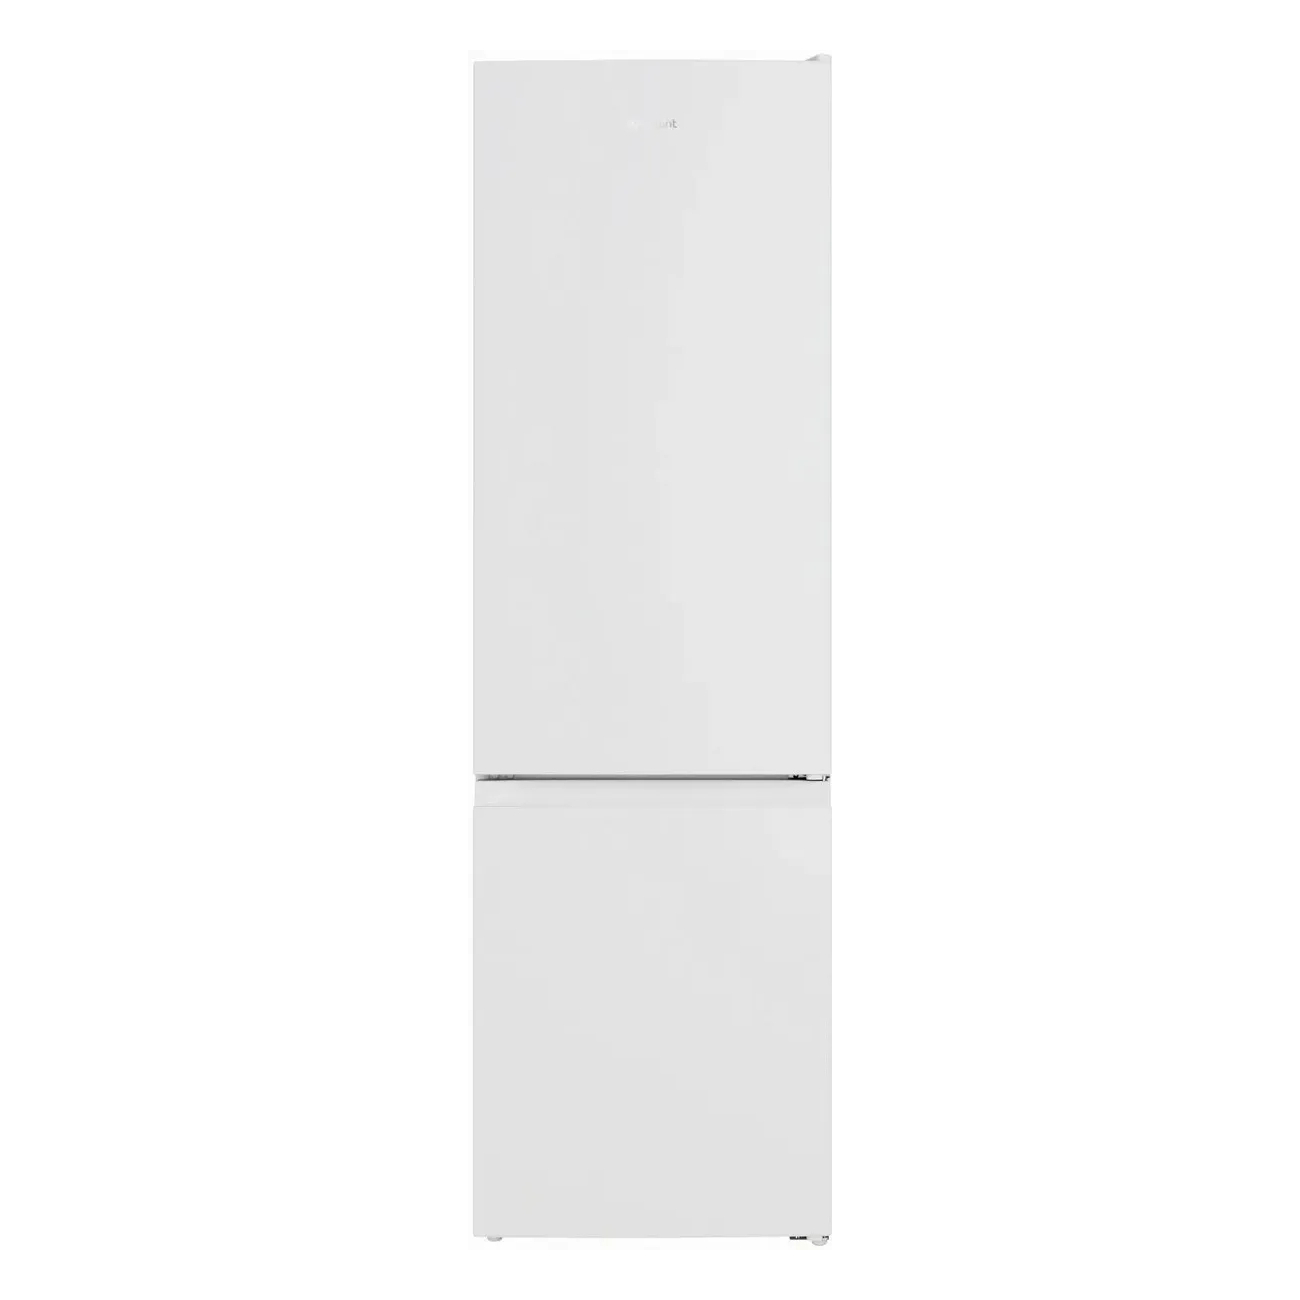 Холодильник HotPoint HT 4200 W белый холодильник hotpoint ht 5180 w белый серебристый